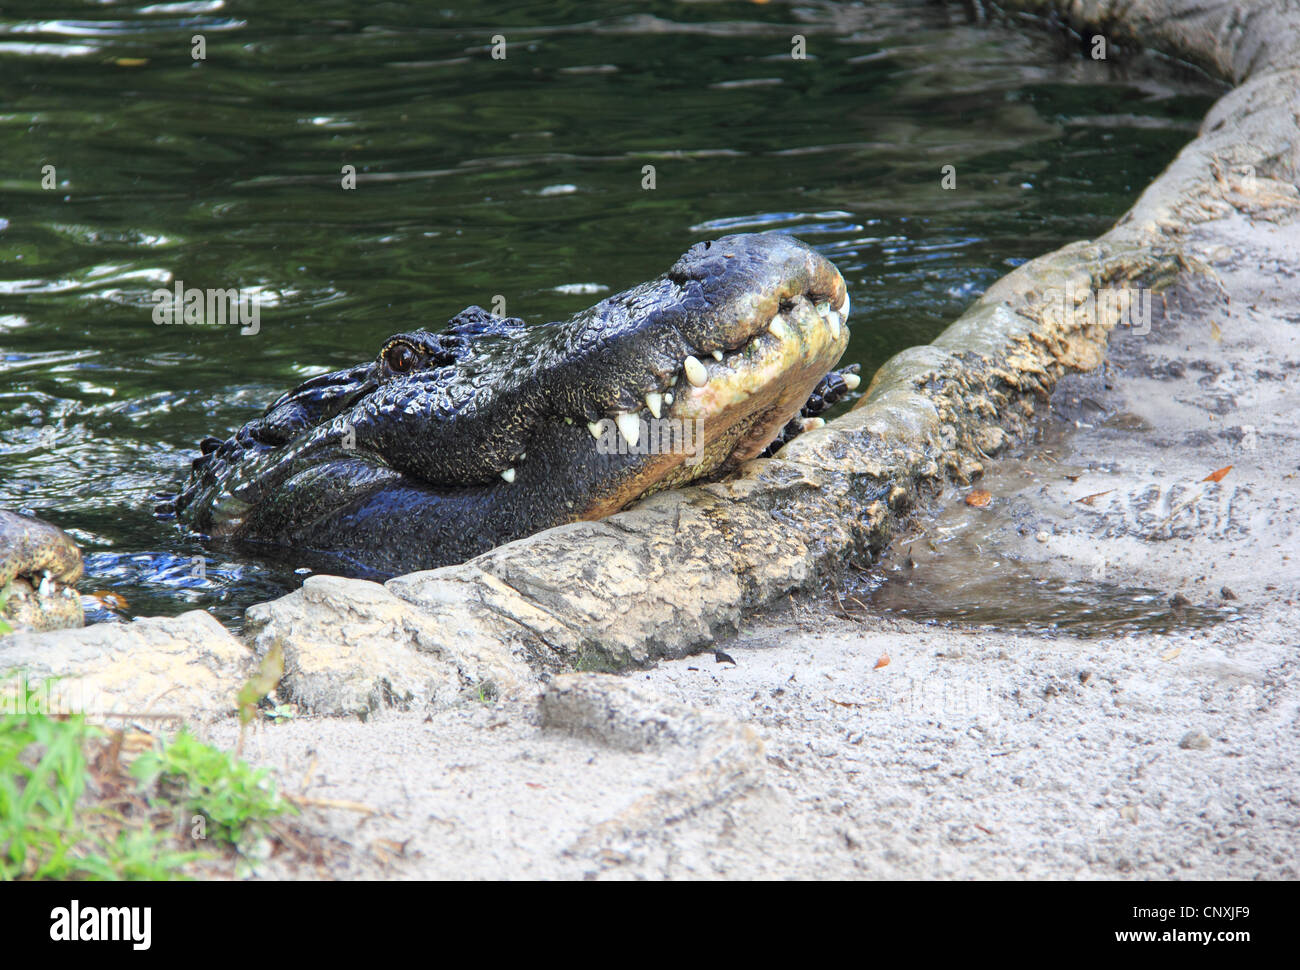 Un alligator sortant de l'eau Banque D'Images